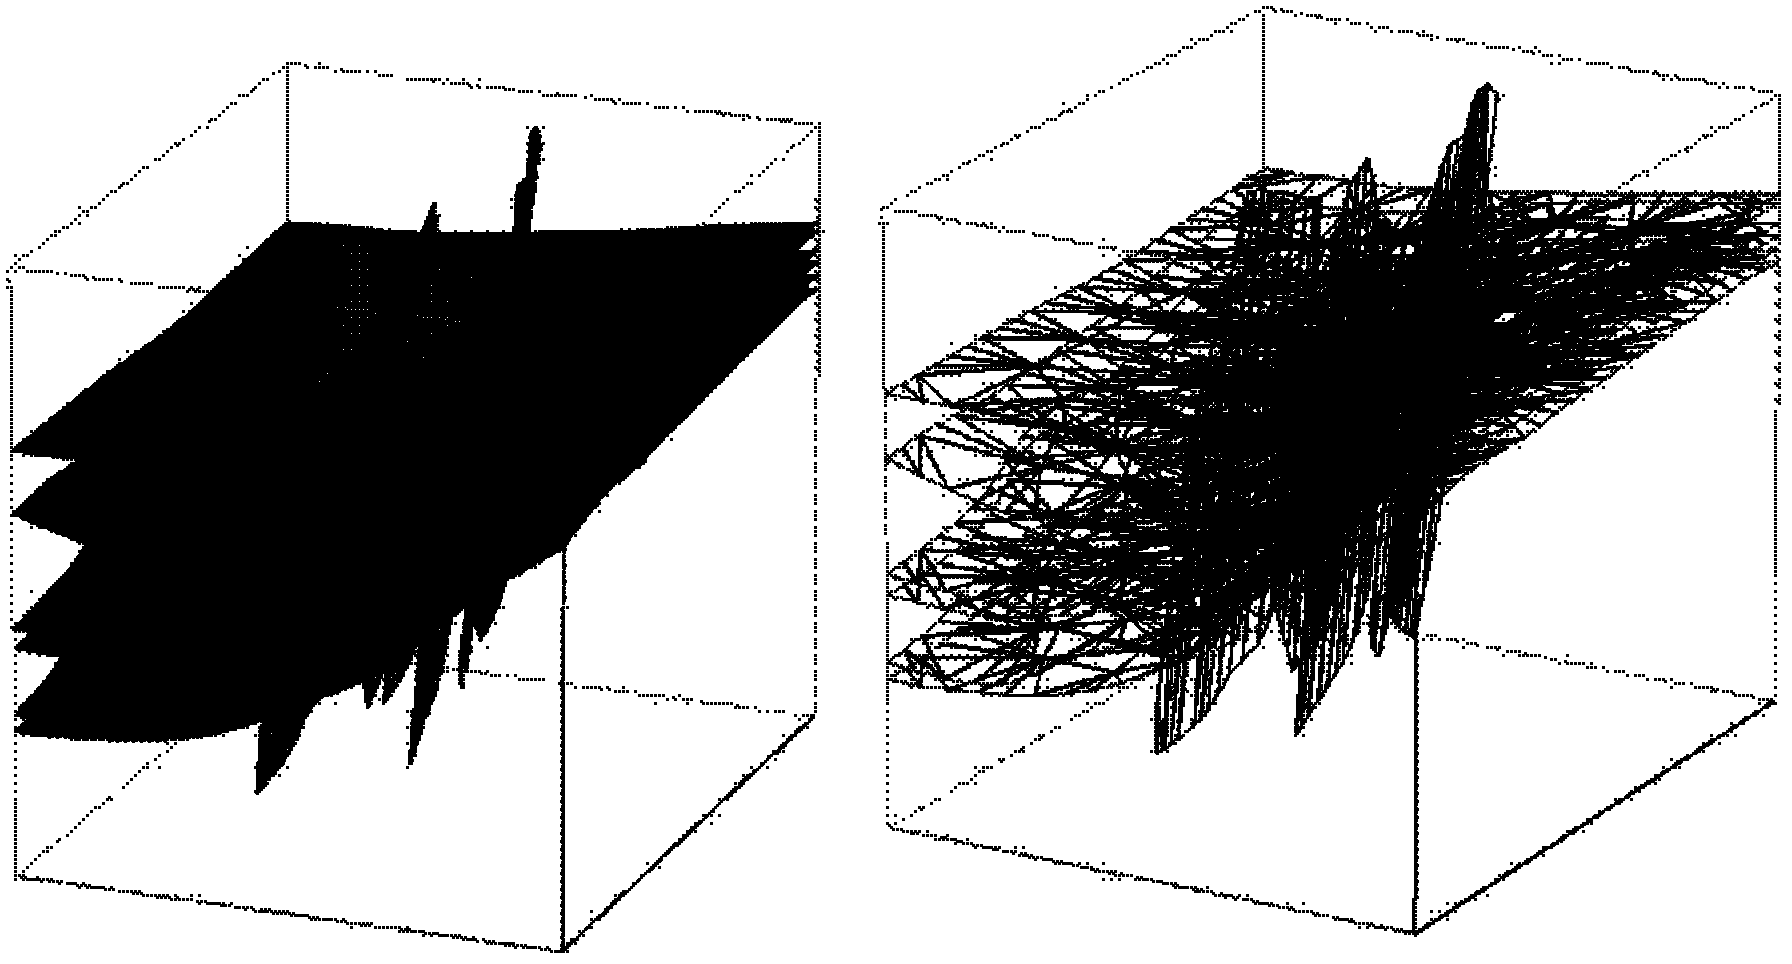 Geological-stratum-structure-based method for generating triangular lattice grids